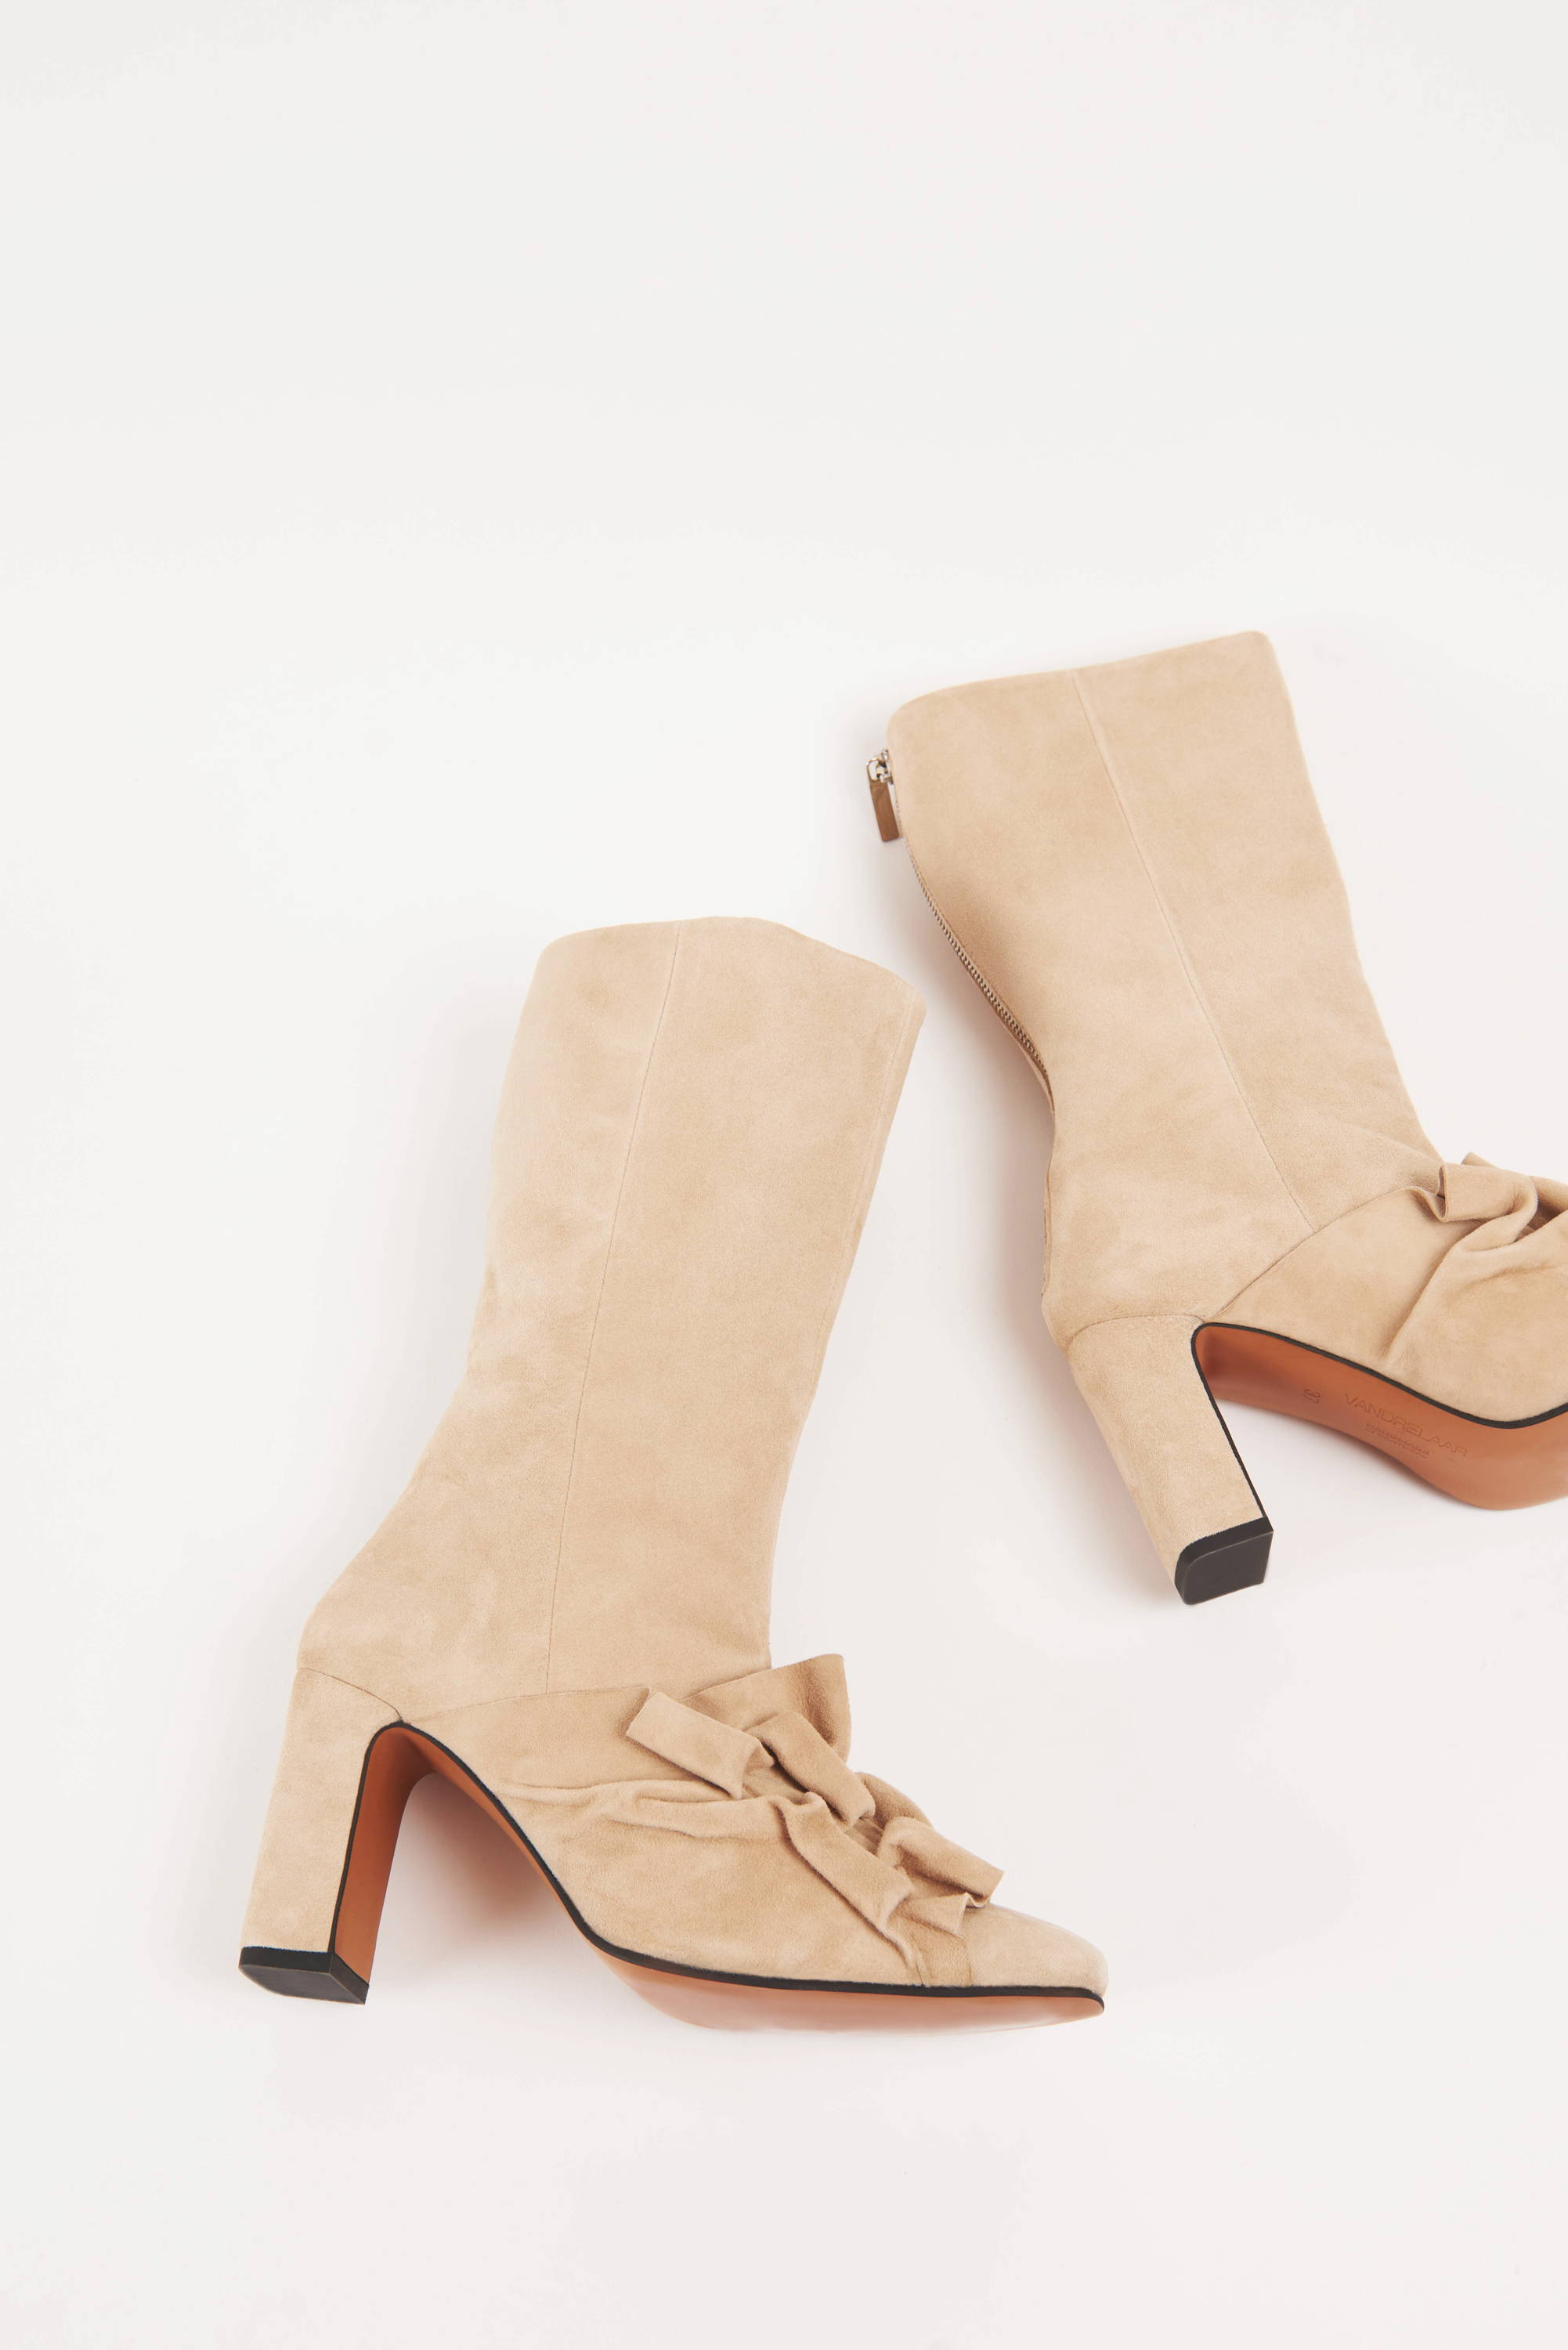 Pair of Vandrelaar Greta ankle high-heel boot in sandy beige suede with silver zip and brown sole